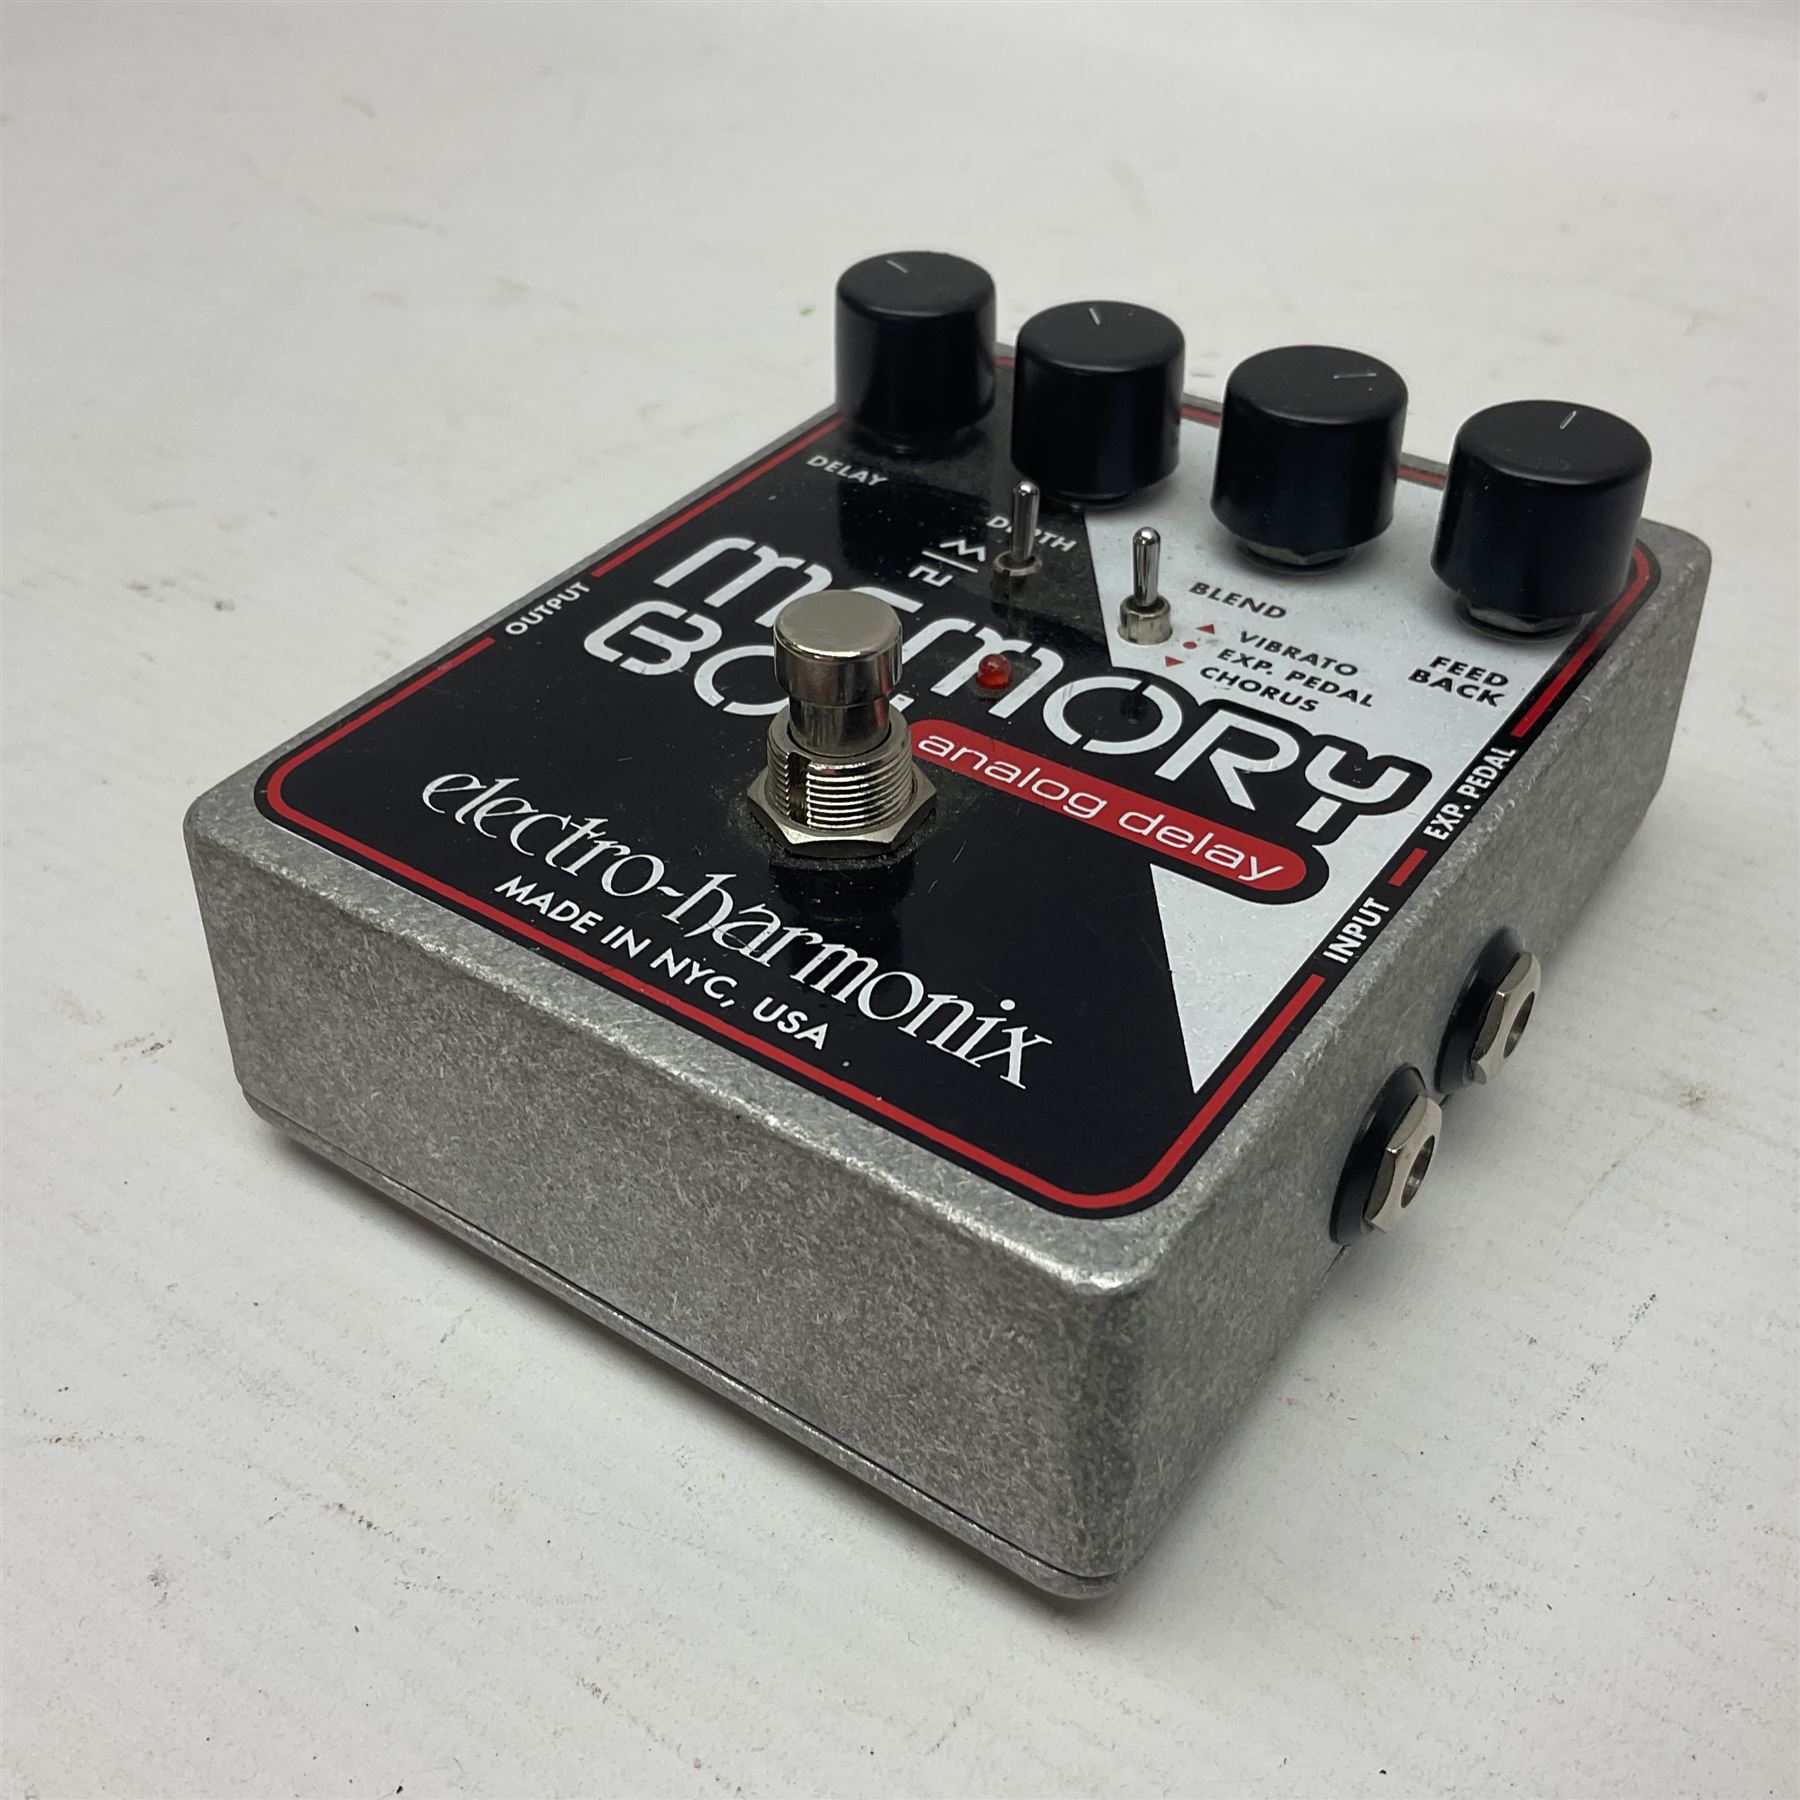 Electro Harmonix Memory Boy analogue delay guitar pedal - Image 2 of 4